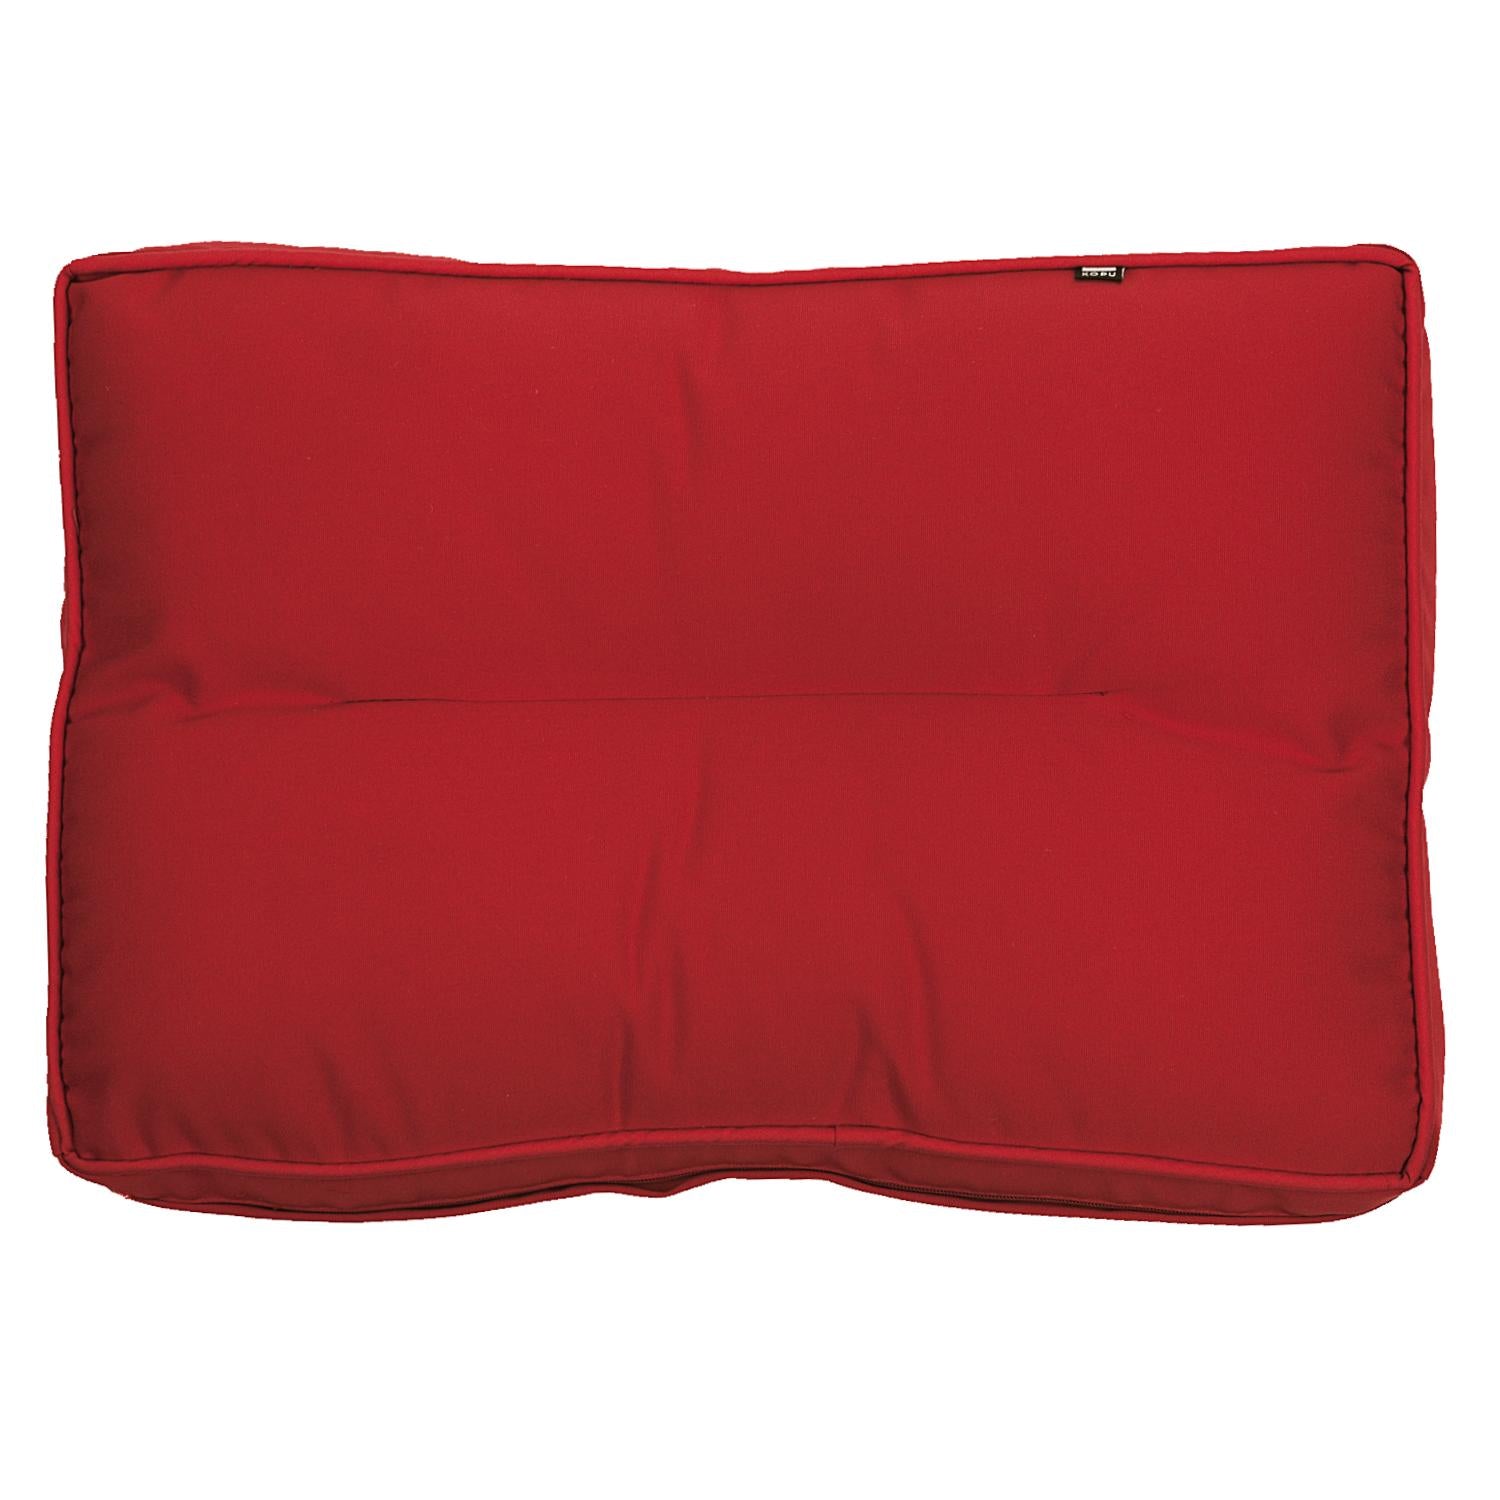 Kopu® Prisma Red Comfortabele Loungekussenset Zit en Rug 60 cm - Rood